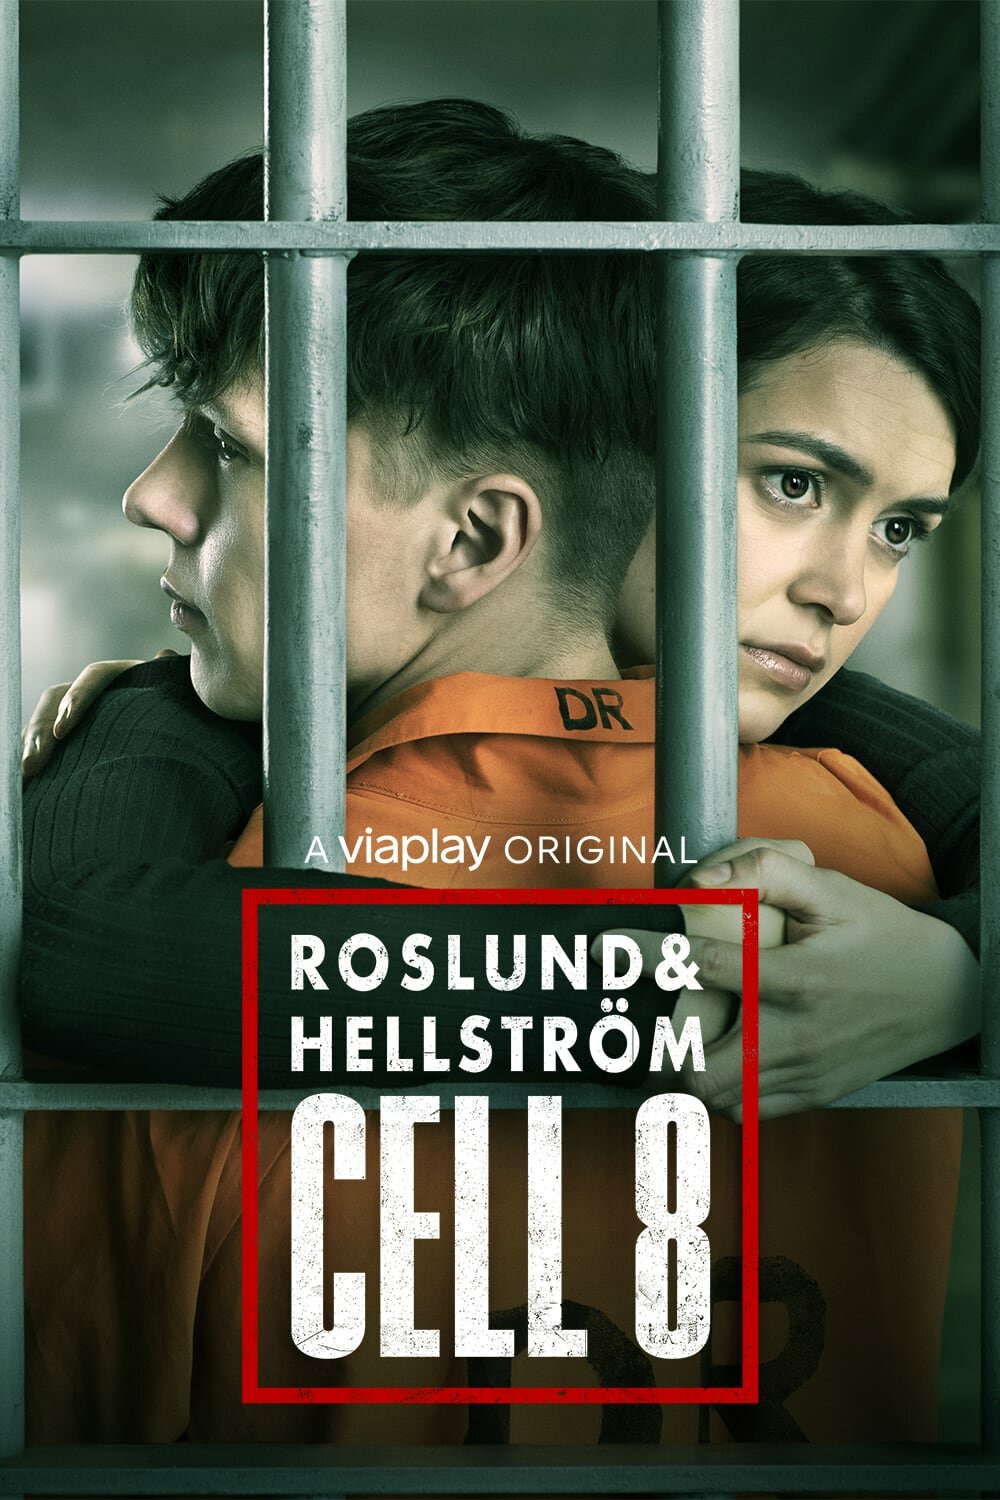 Cell 8 ne zaman